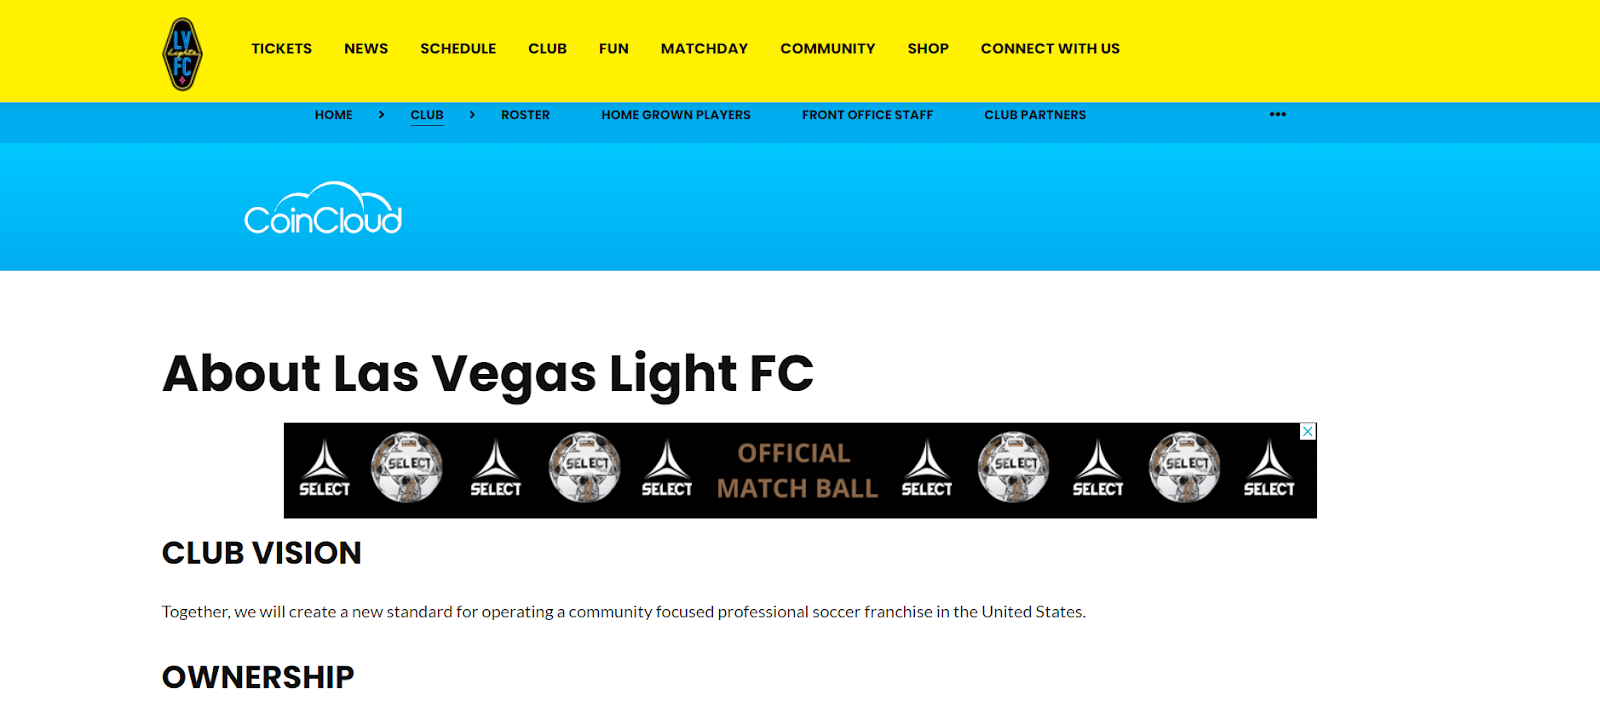 Las Vegas Light Football Club